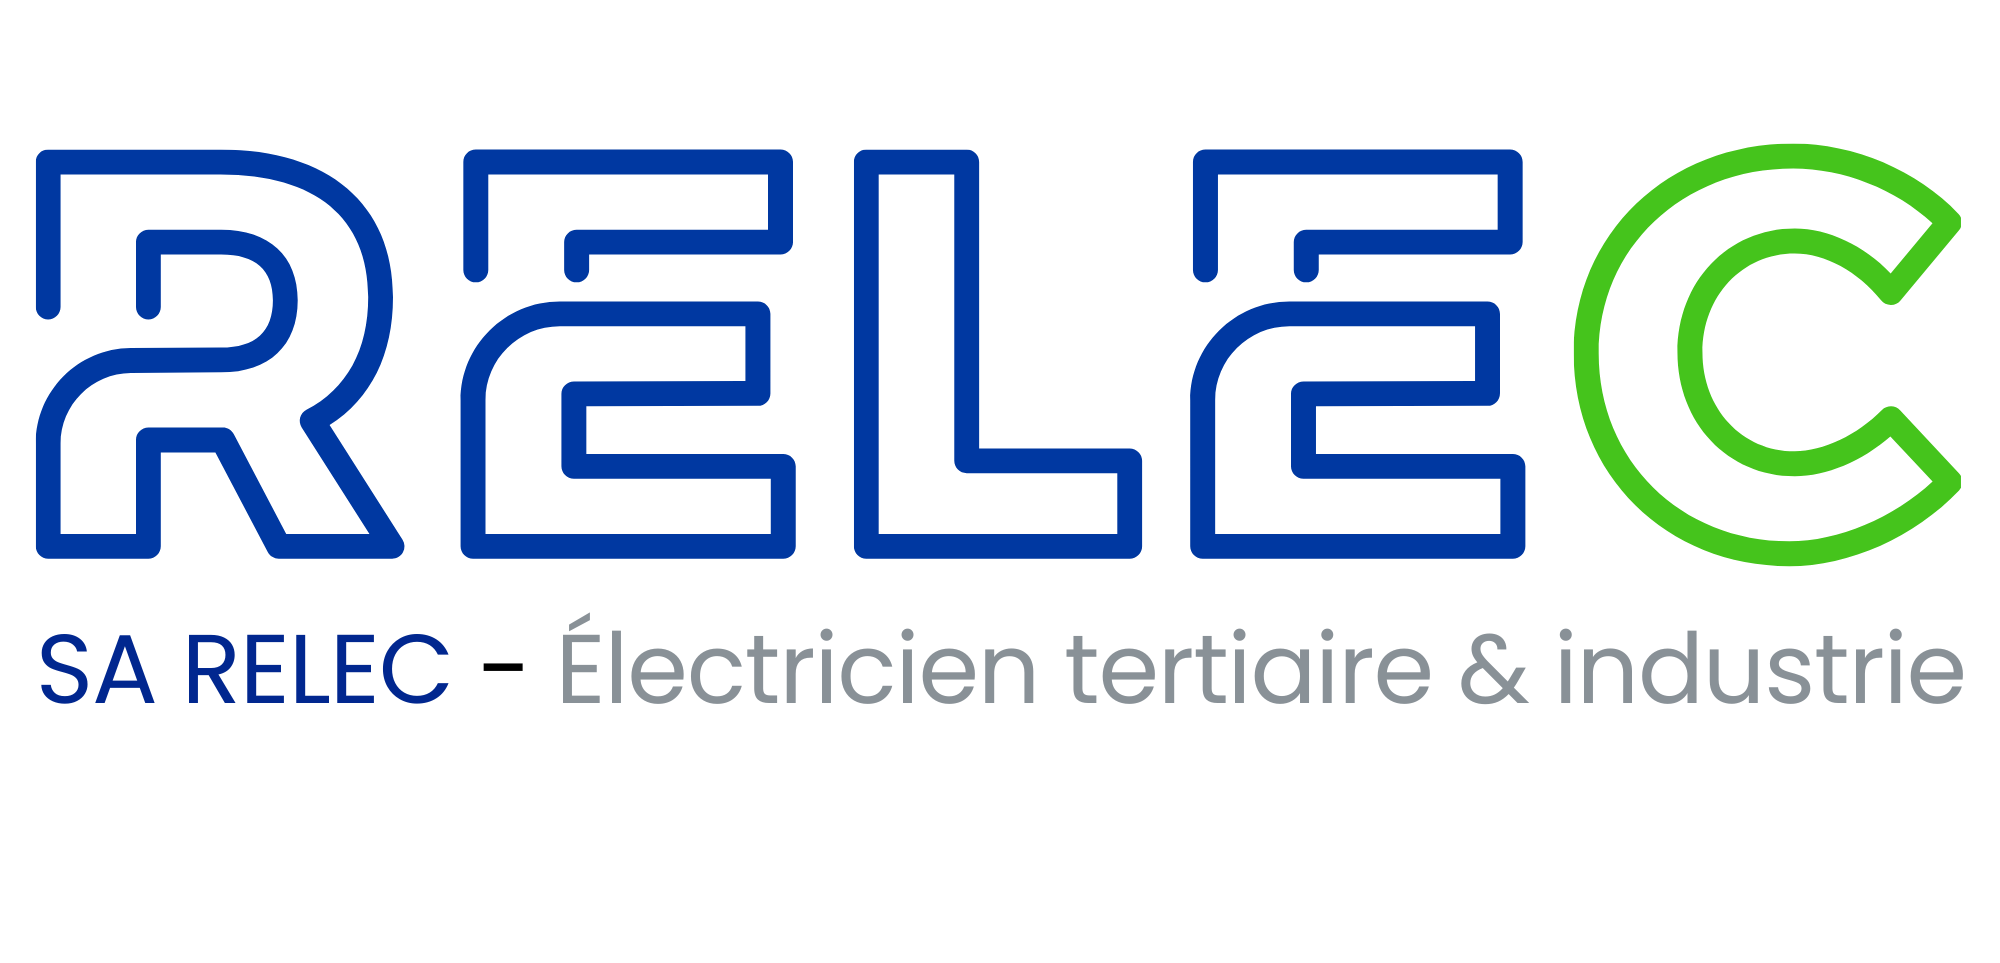 Relec Sarelec Logo